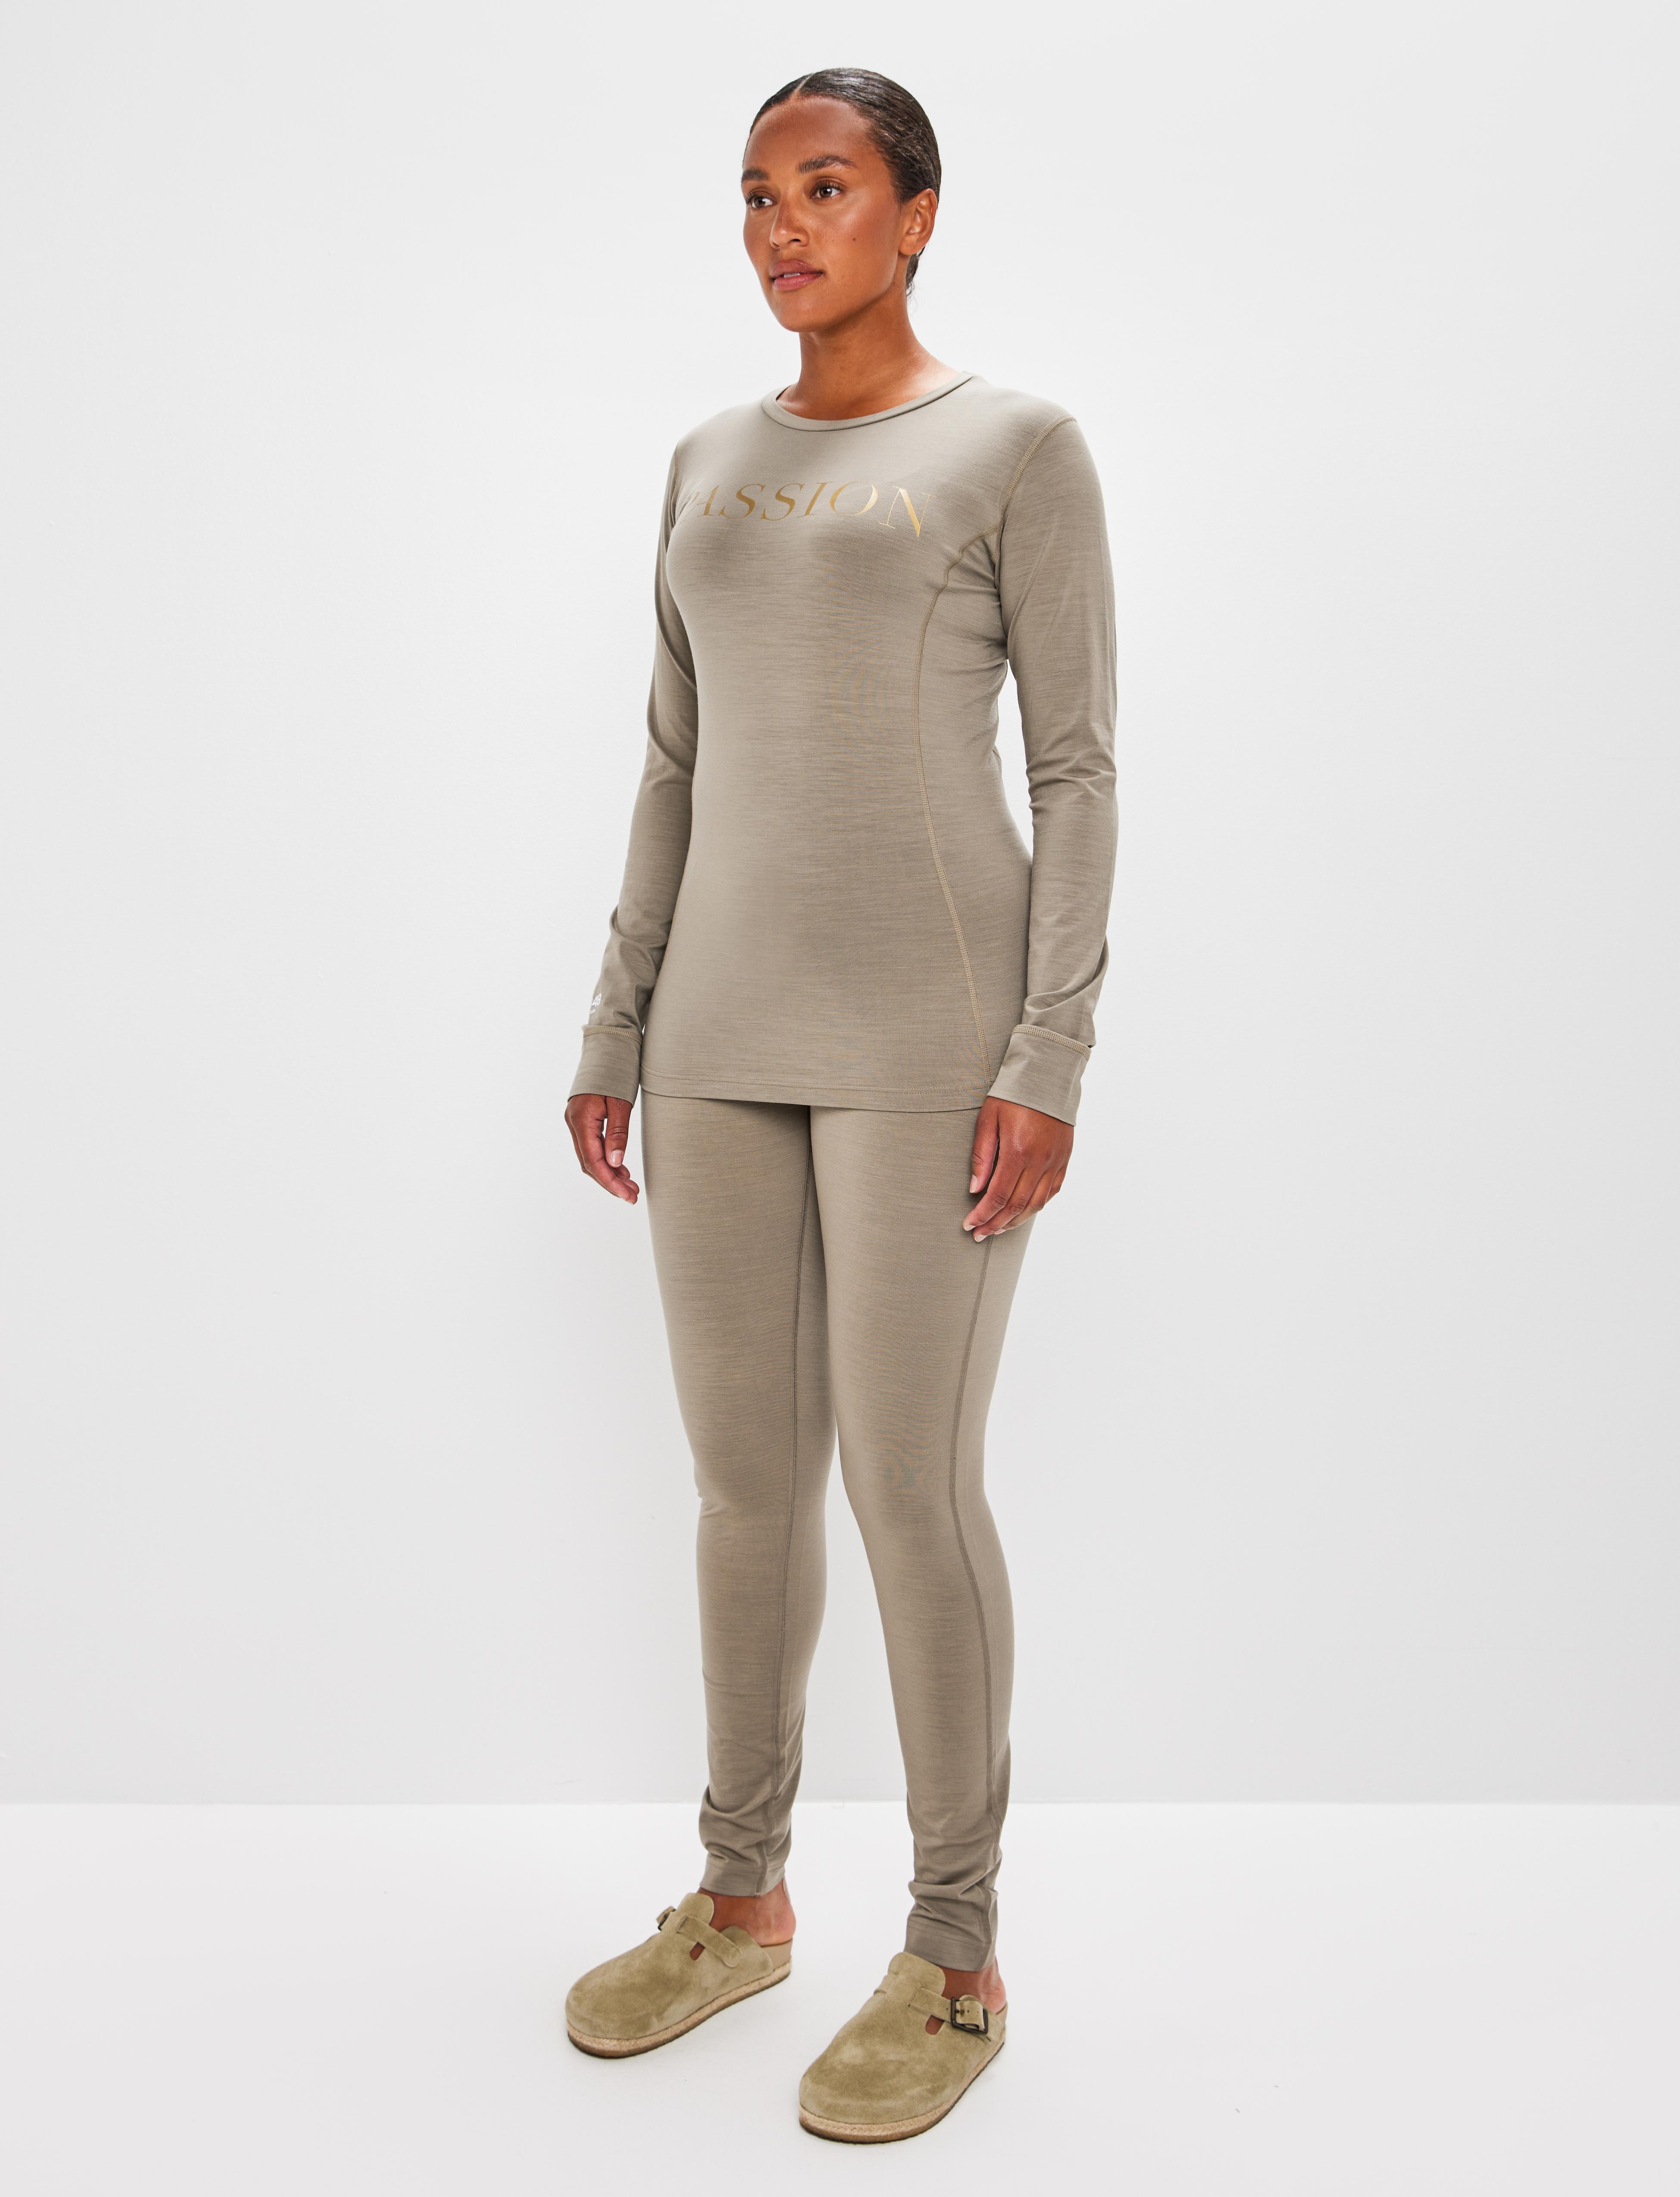 Shop women\'s merino wool underwear - Altitude 8848 online